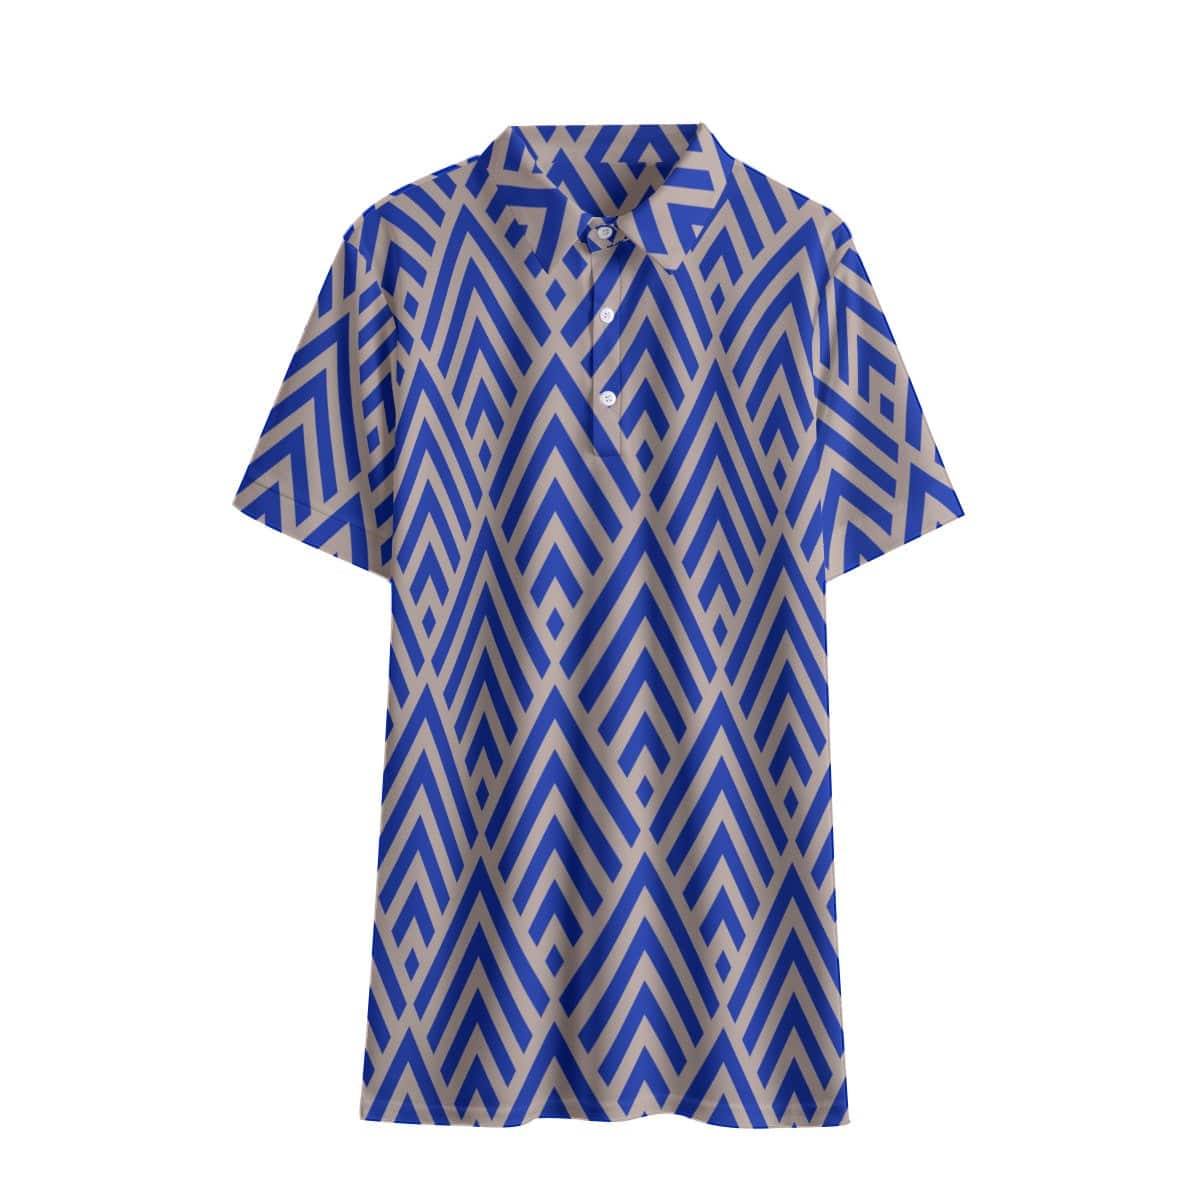 Yoycol Shirt 2XL / Cobalt Blue Azul Azteca - Men's Polo Shirt | Birdseye